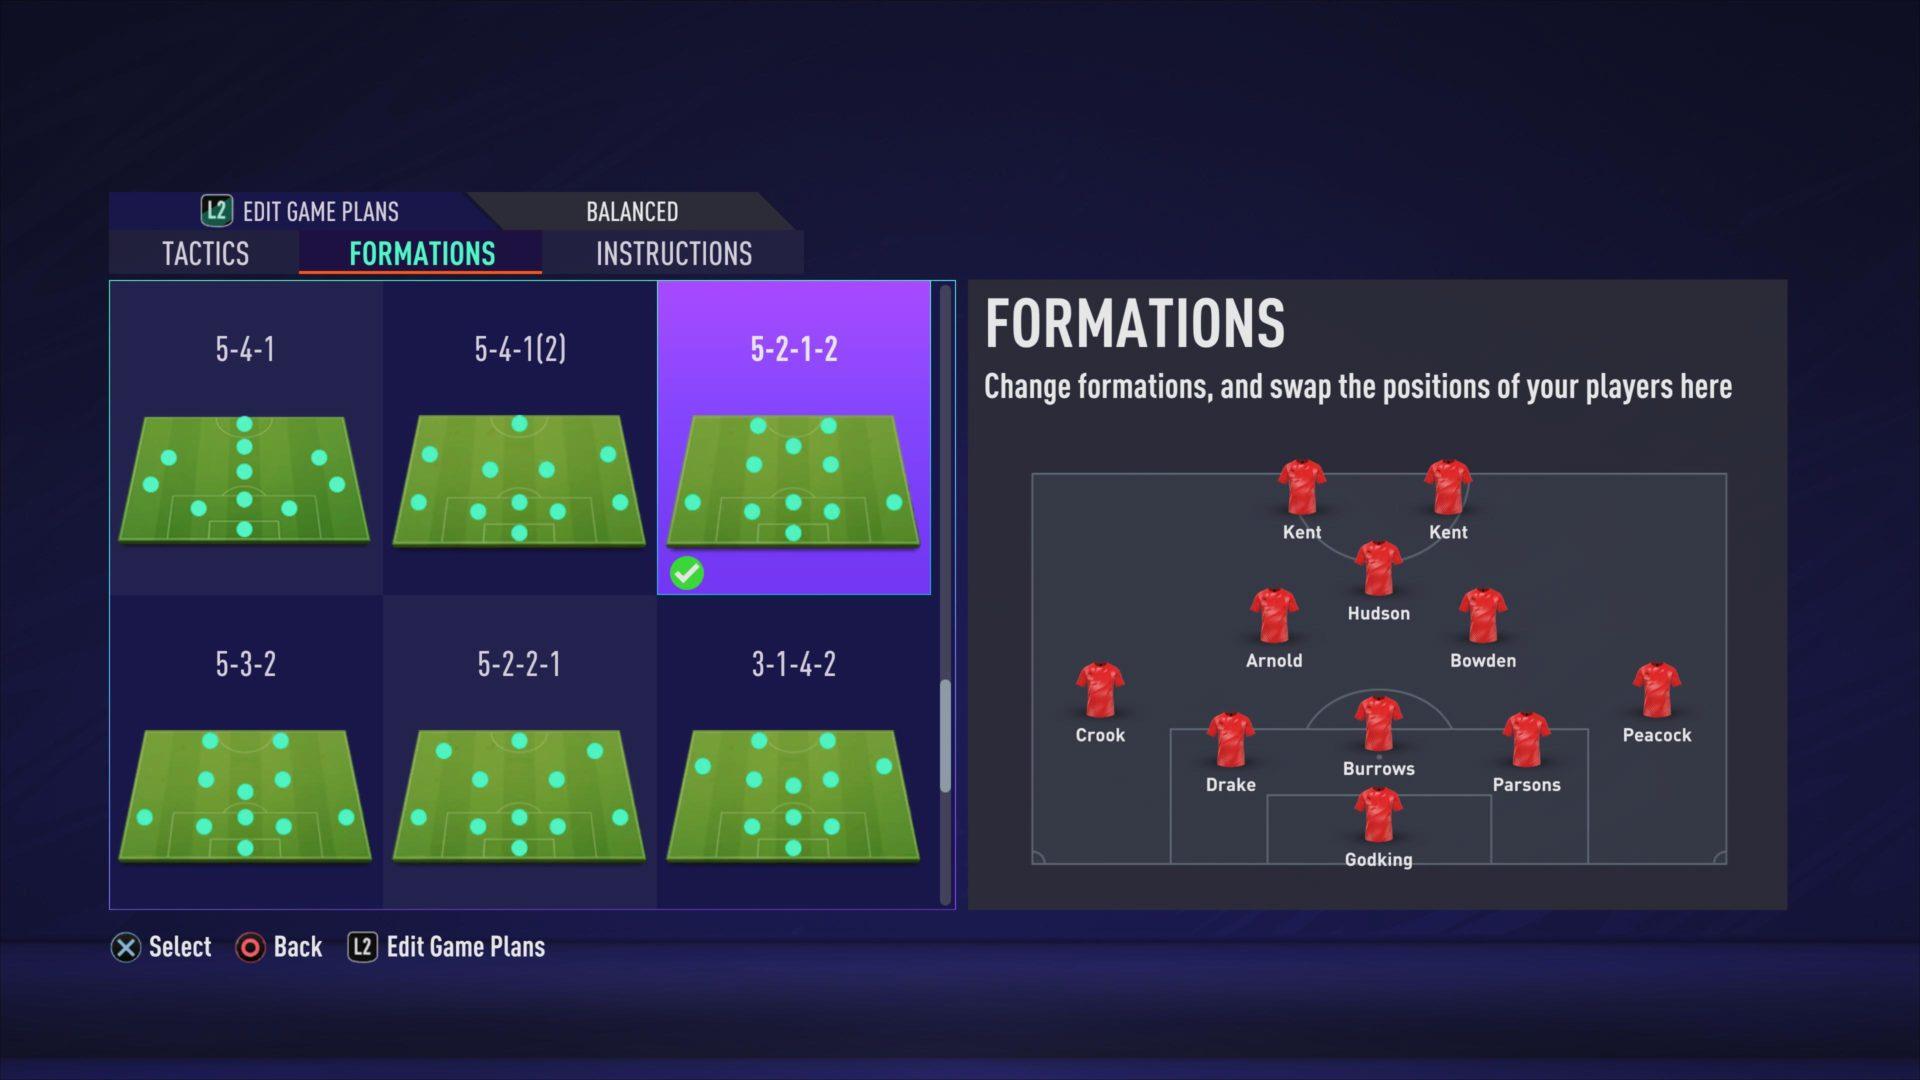 FIFA 23 PRO CLUBS - BEST *META* CUSTOM TACTICS AND FORMATION 4-2-3-1  